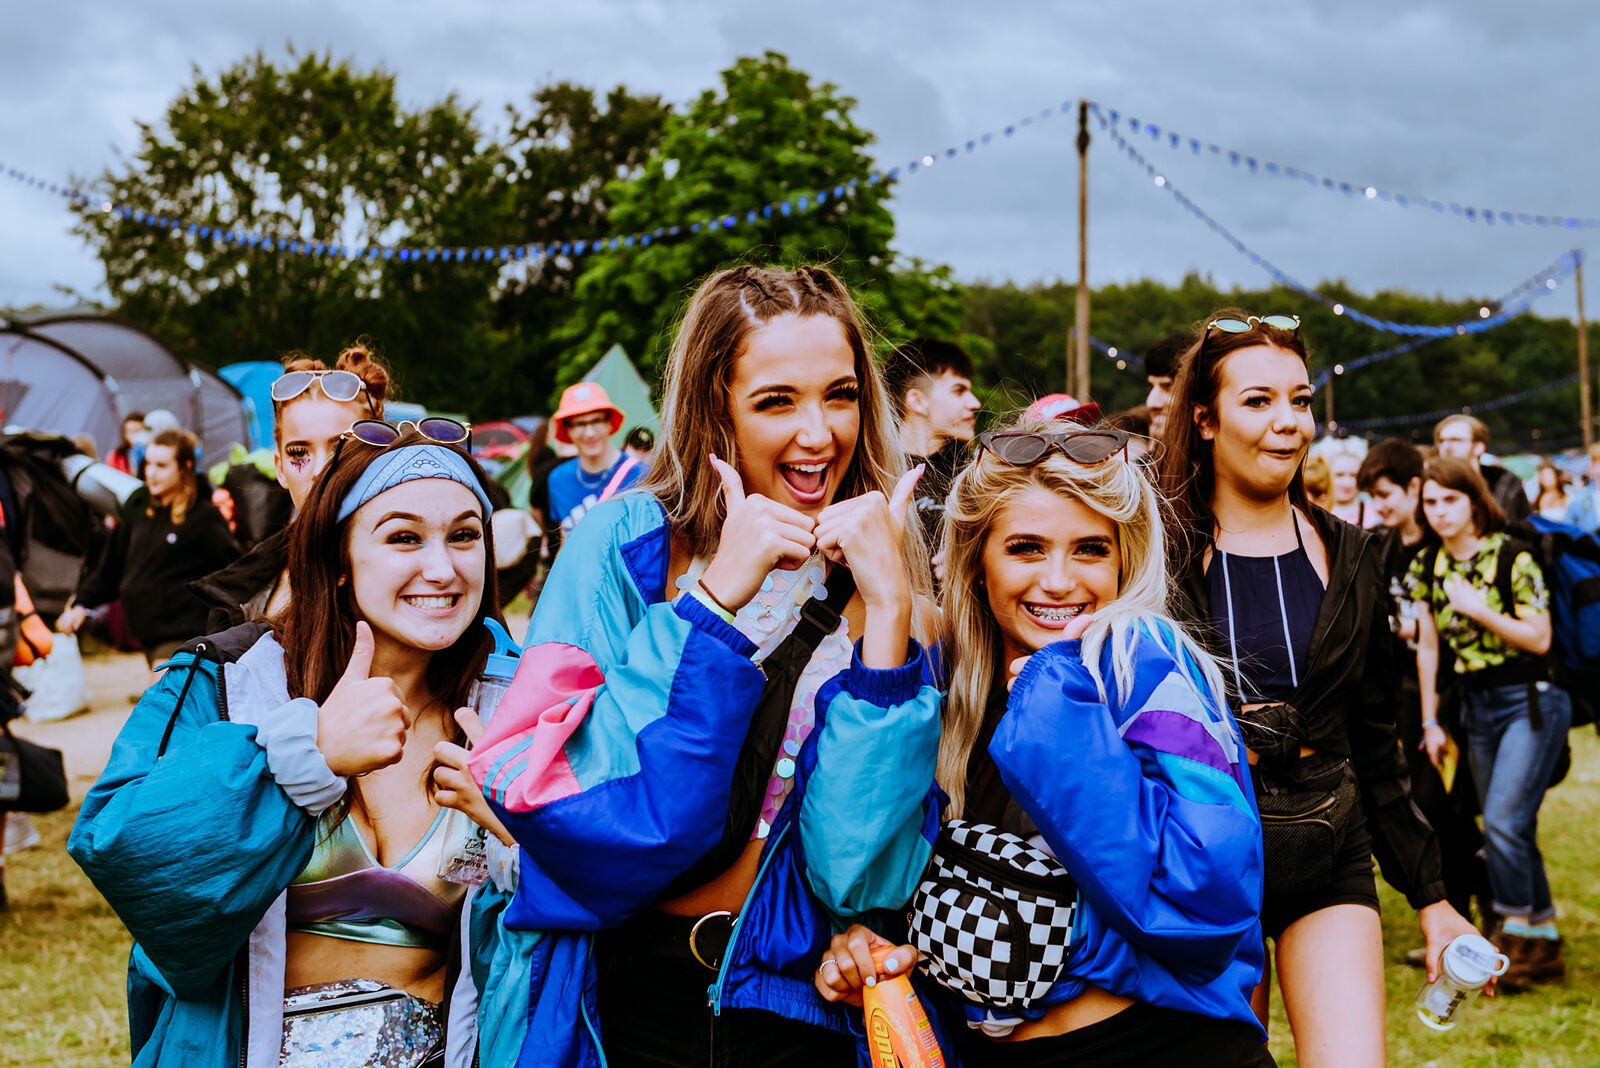 Leeds Festival 2019